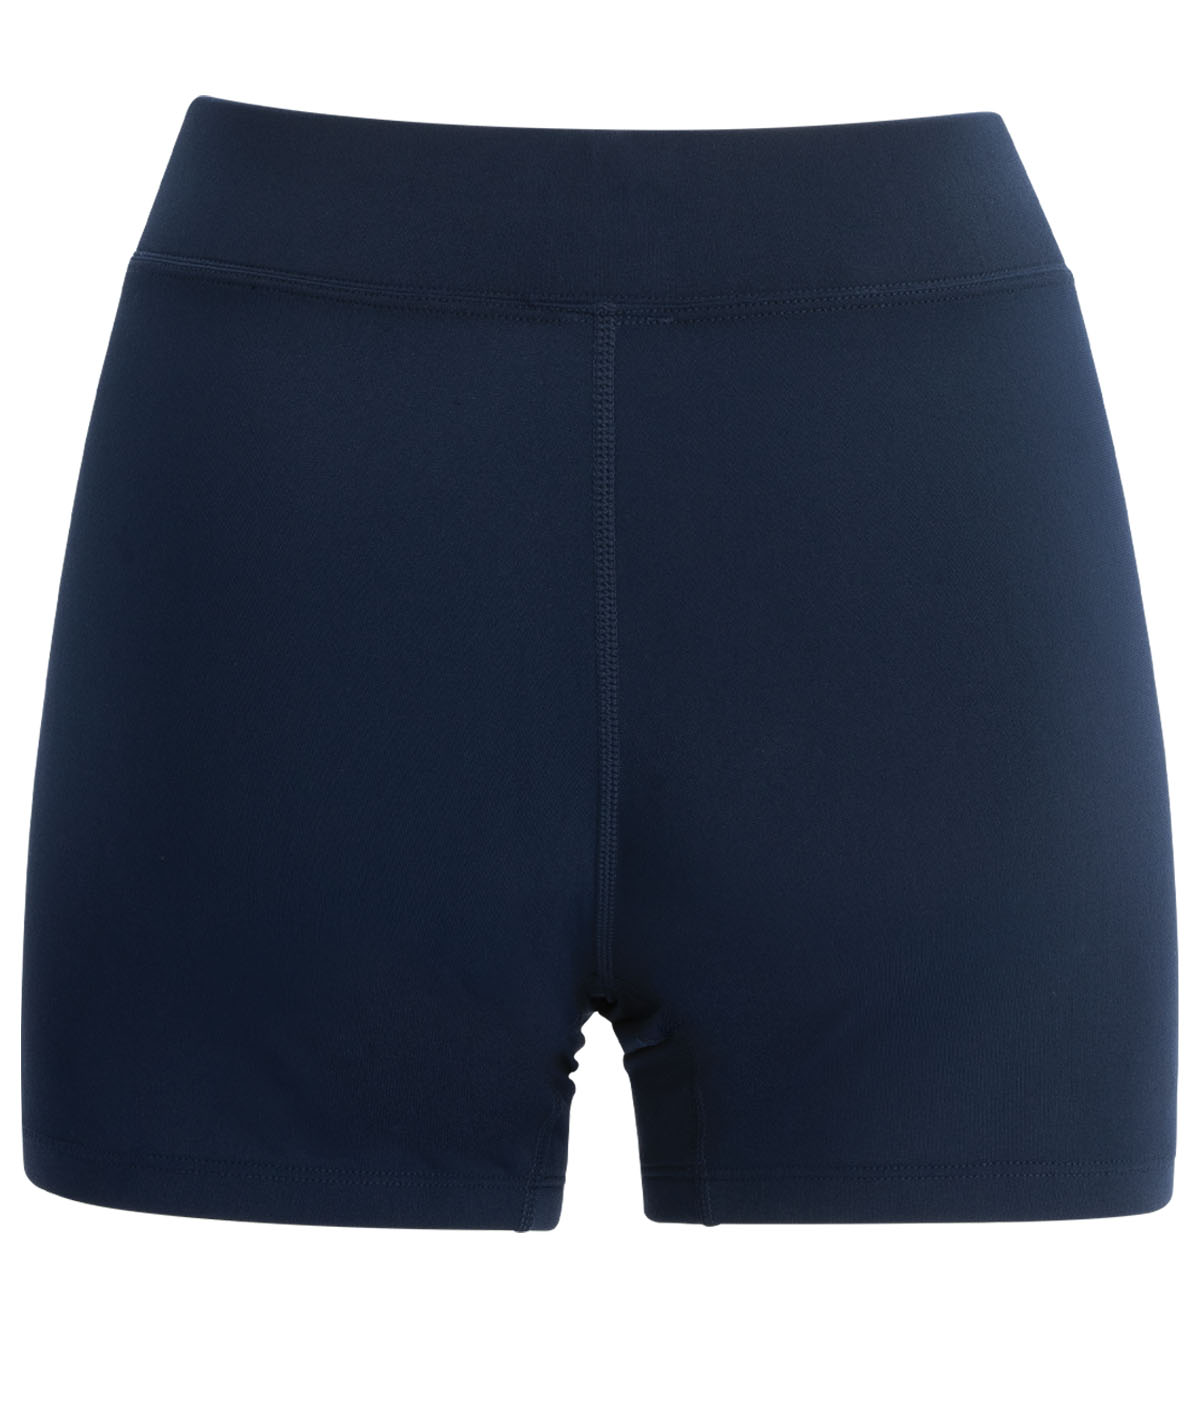 Women's Aquashape Solid Fitted Shorts